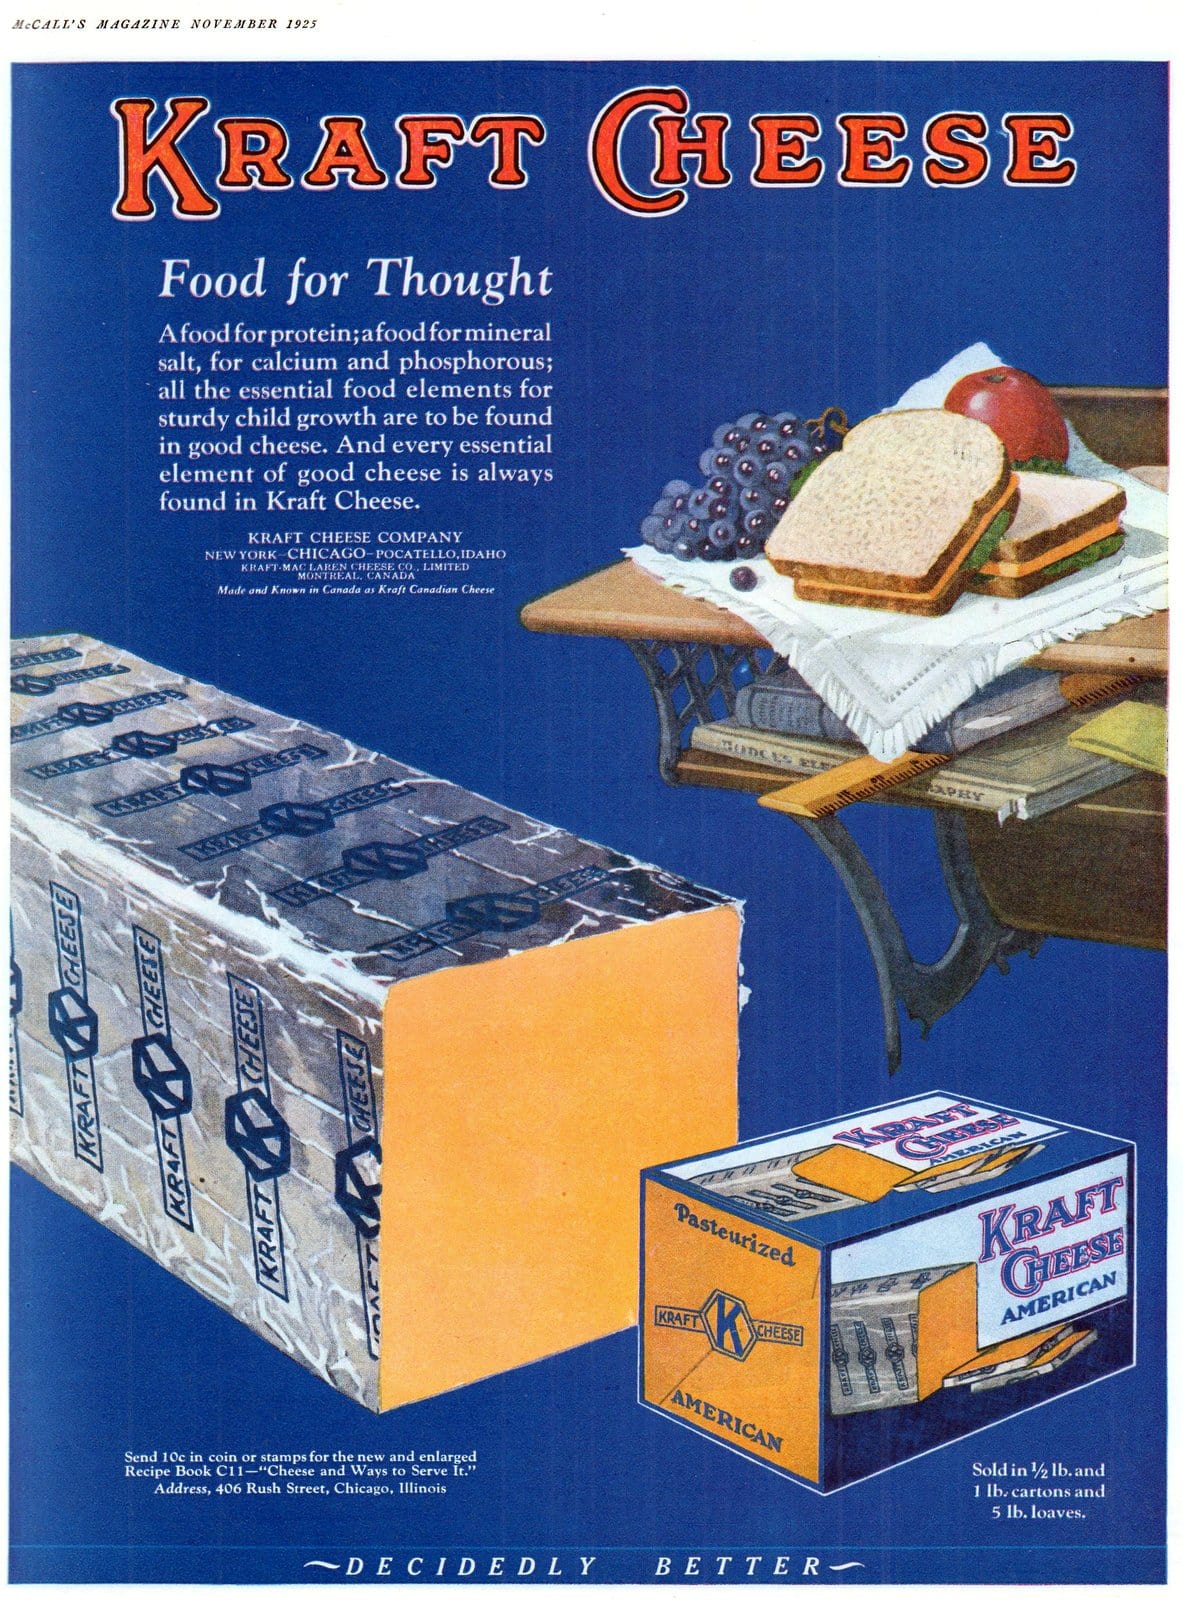 Kraft Cheese - American cheese loaf (1925)